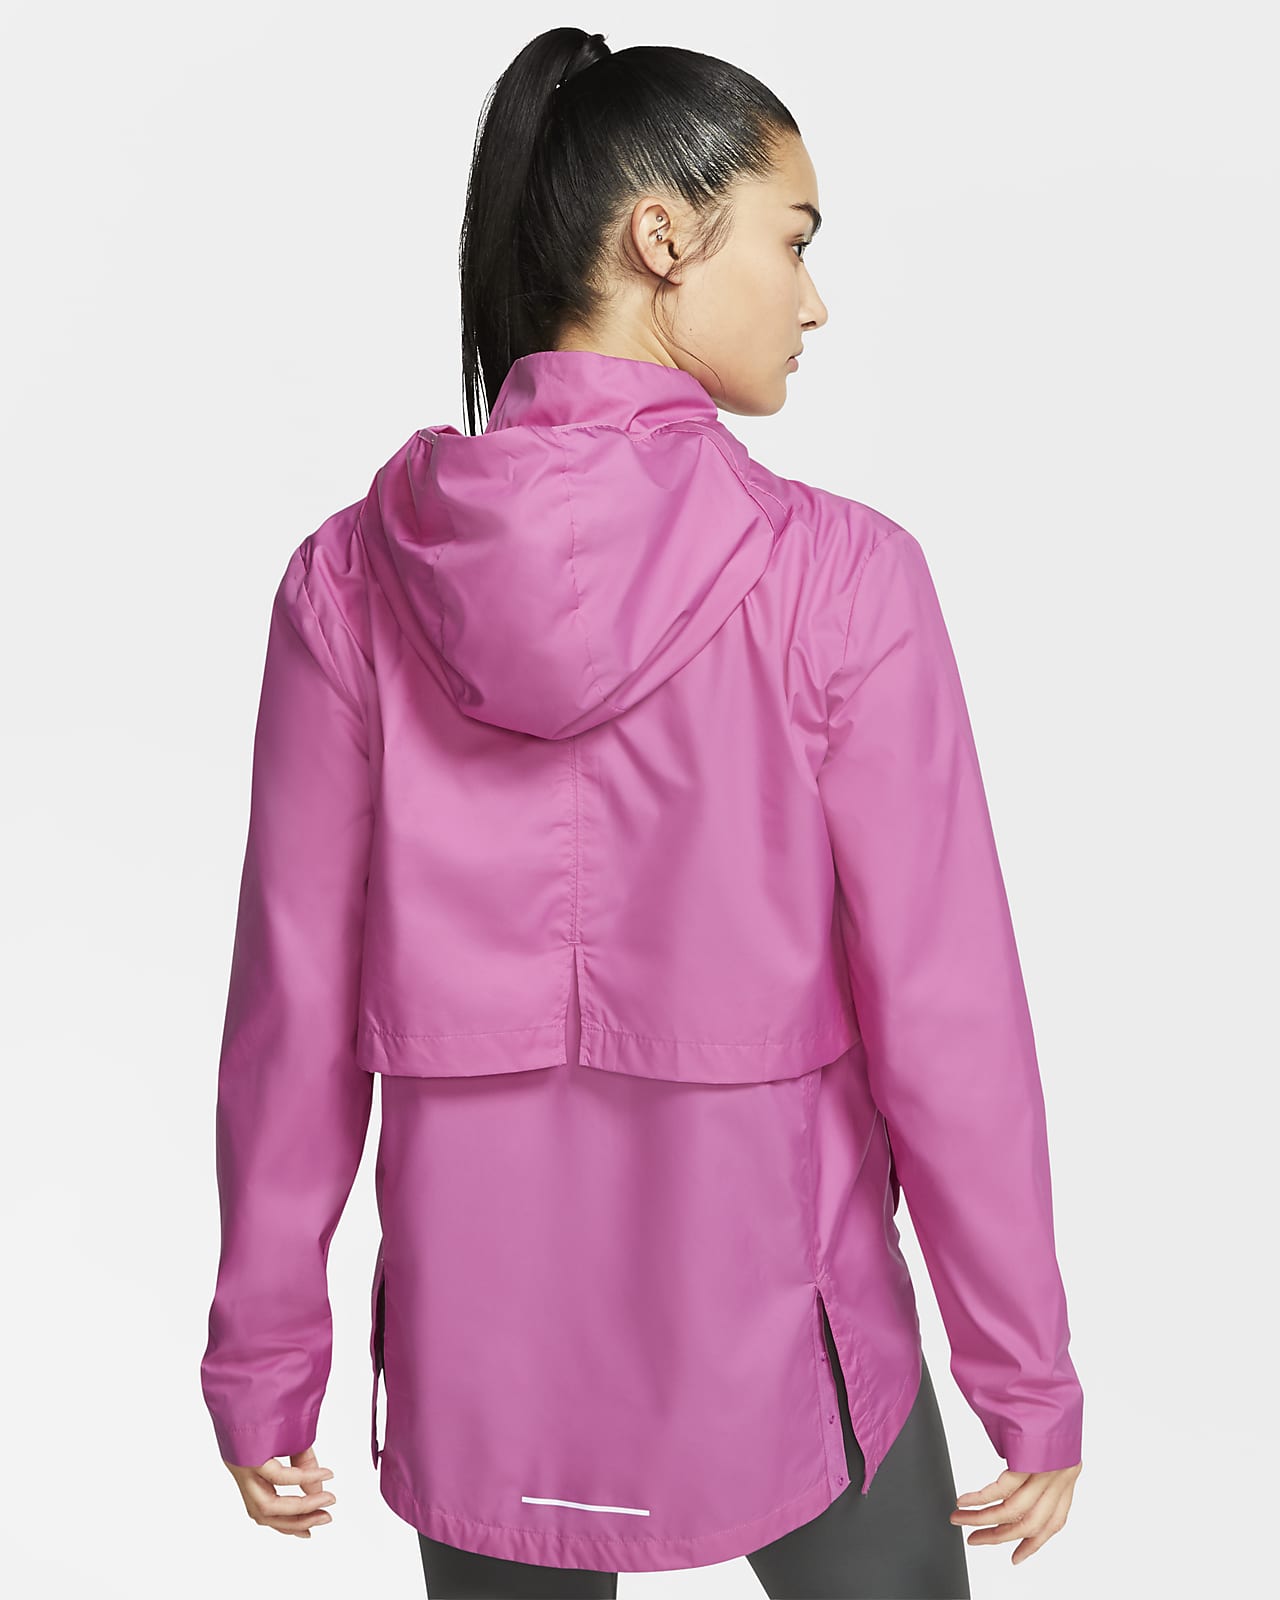 nike women's packable running jacket